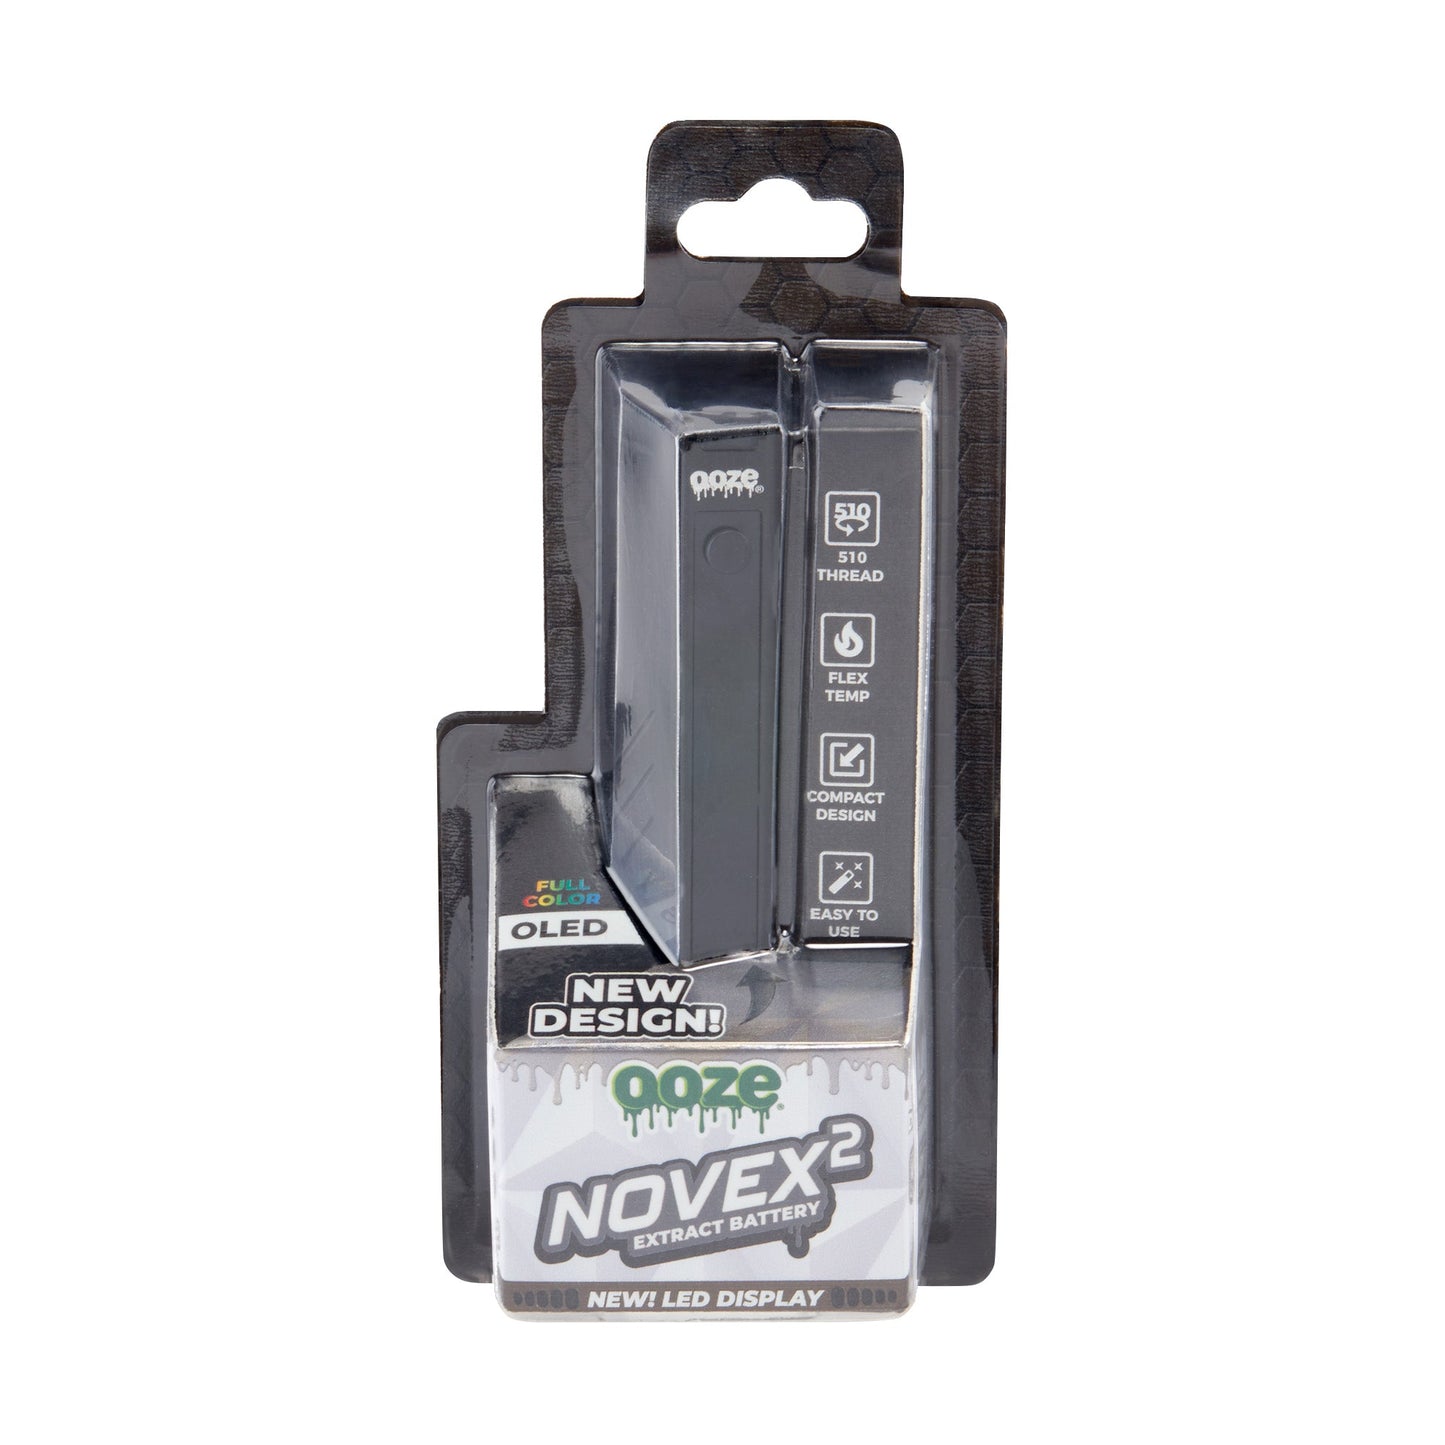 Novex 2 - 400 mAh Vape Battery